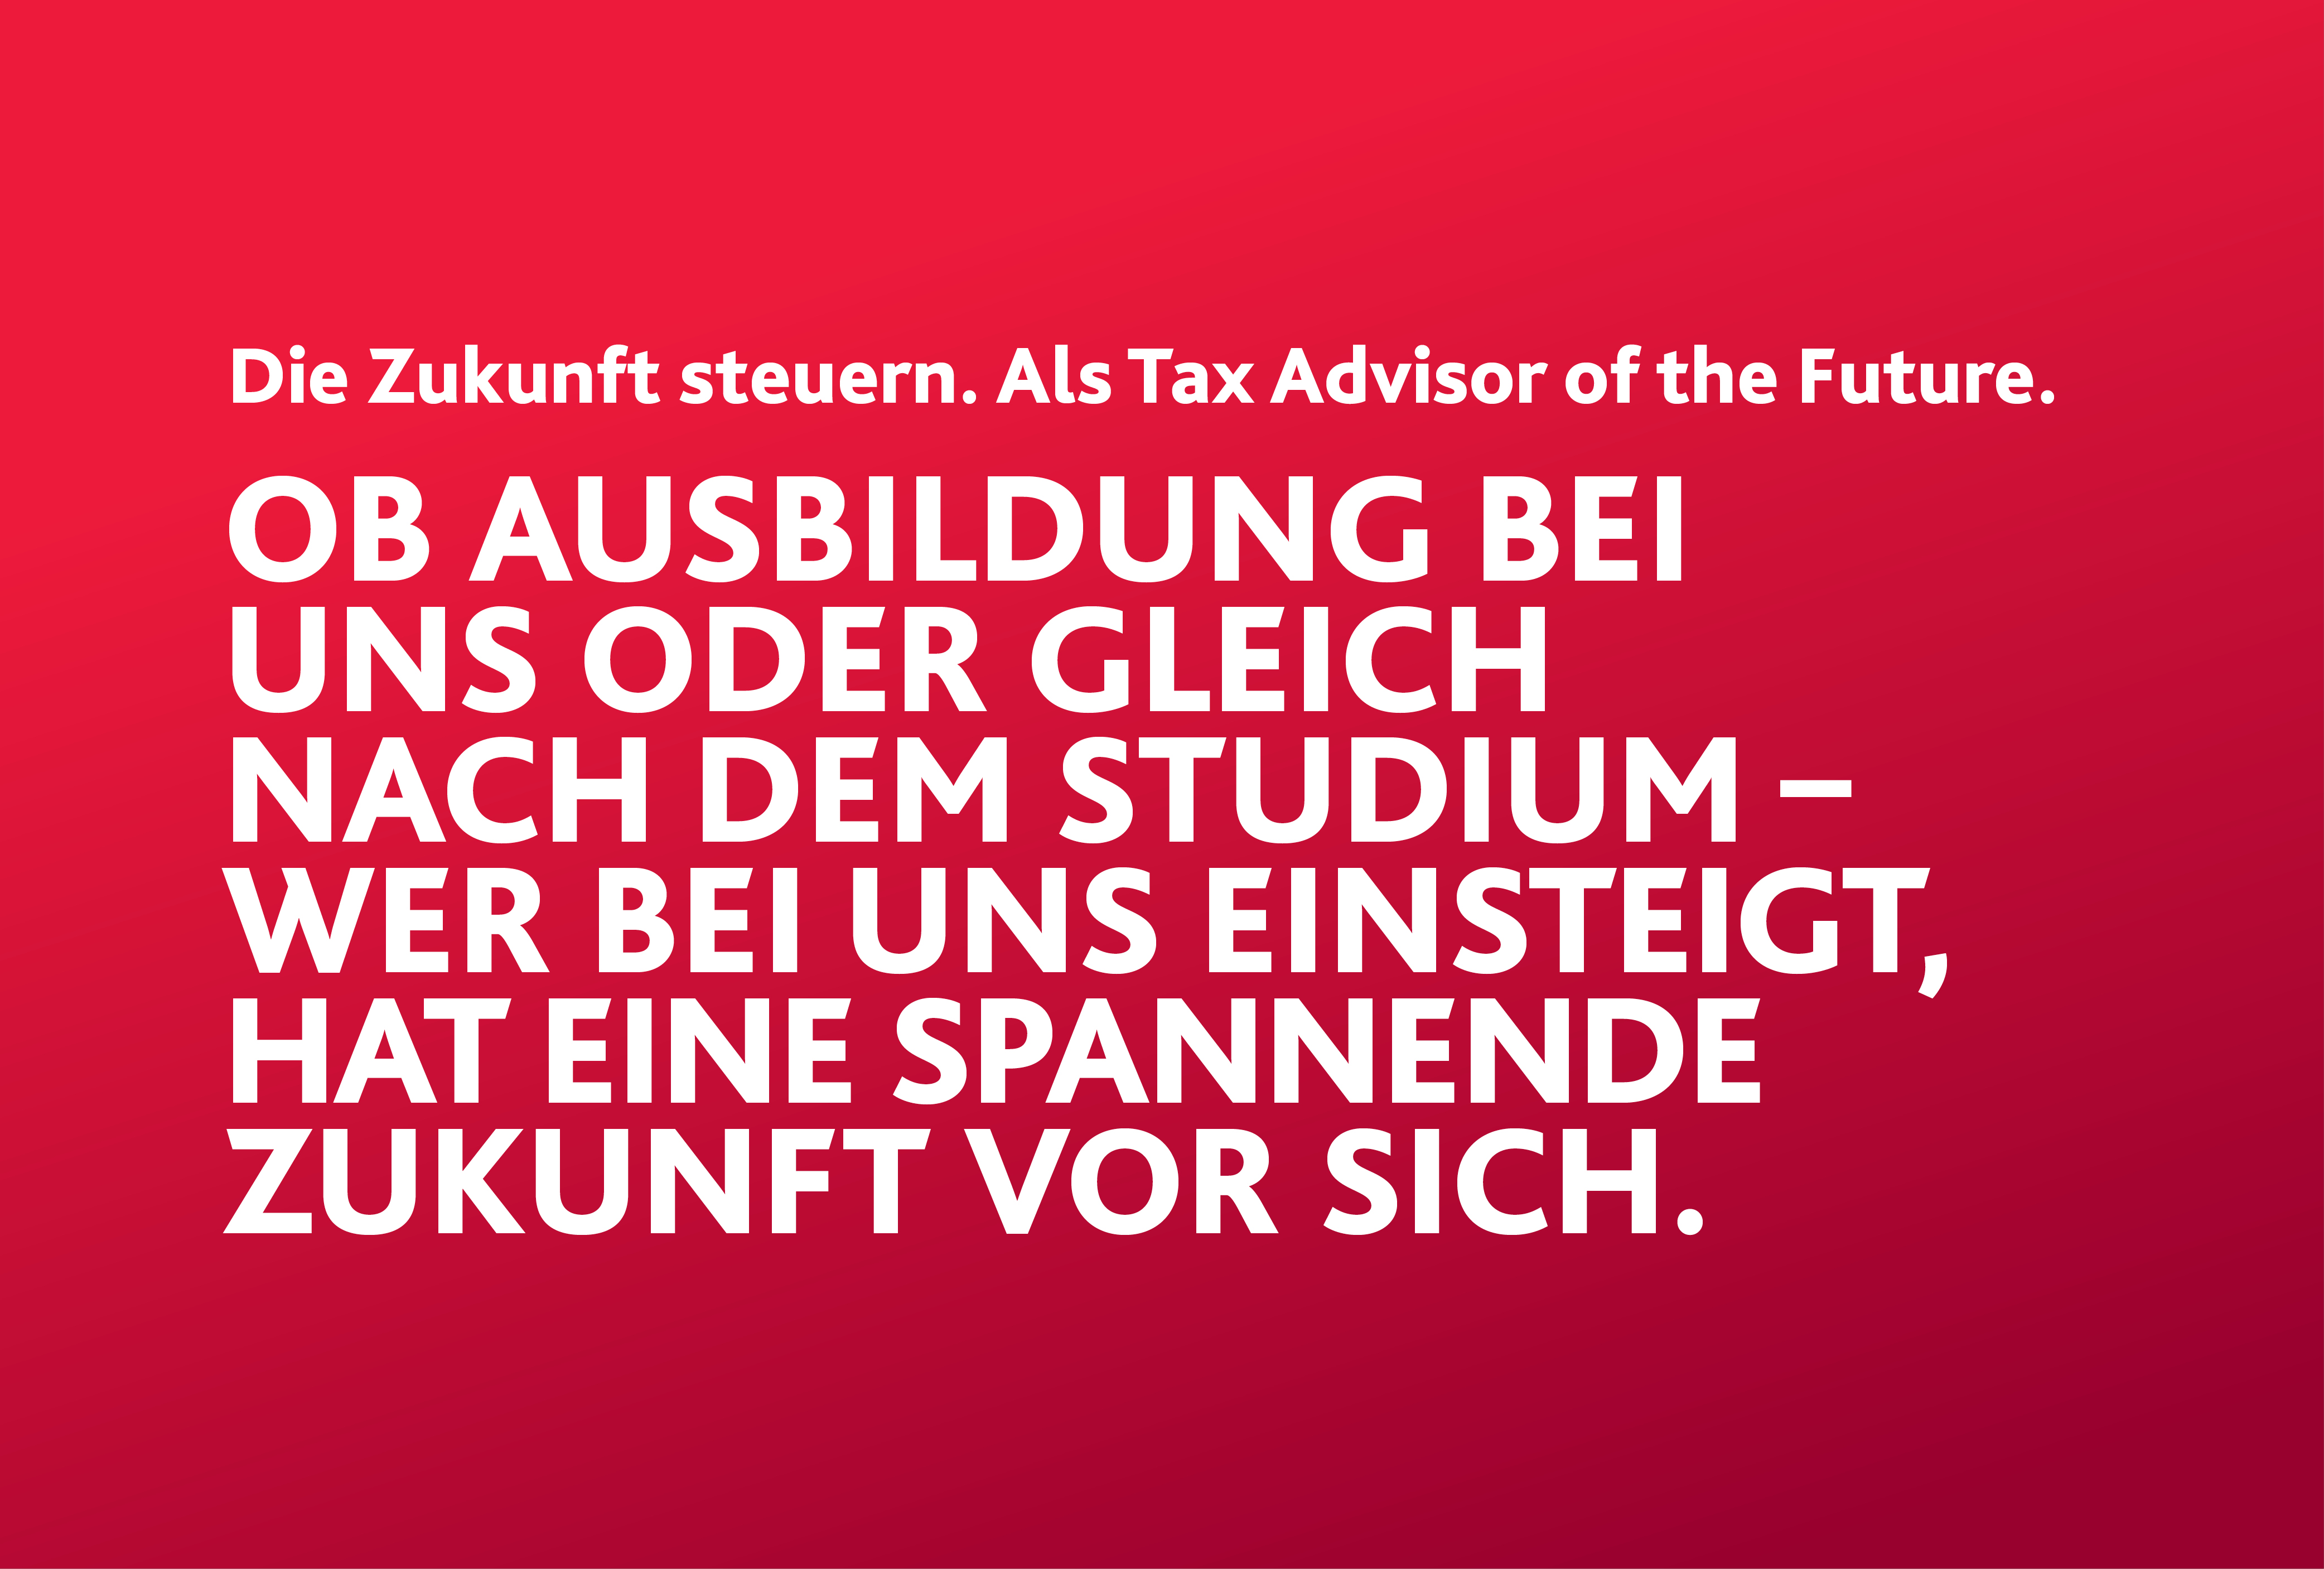 Tax Advisor of the Future, Spannende Zukunft